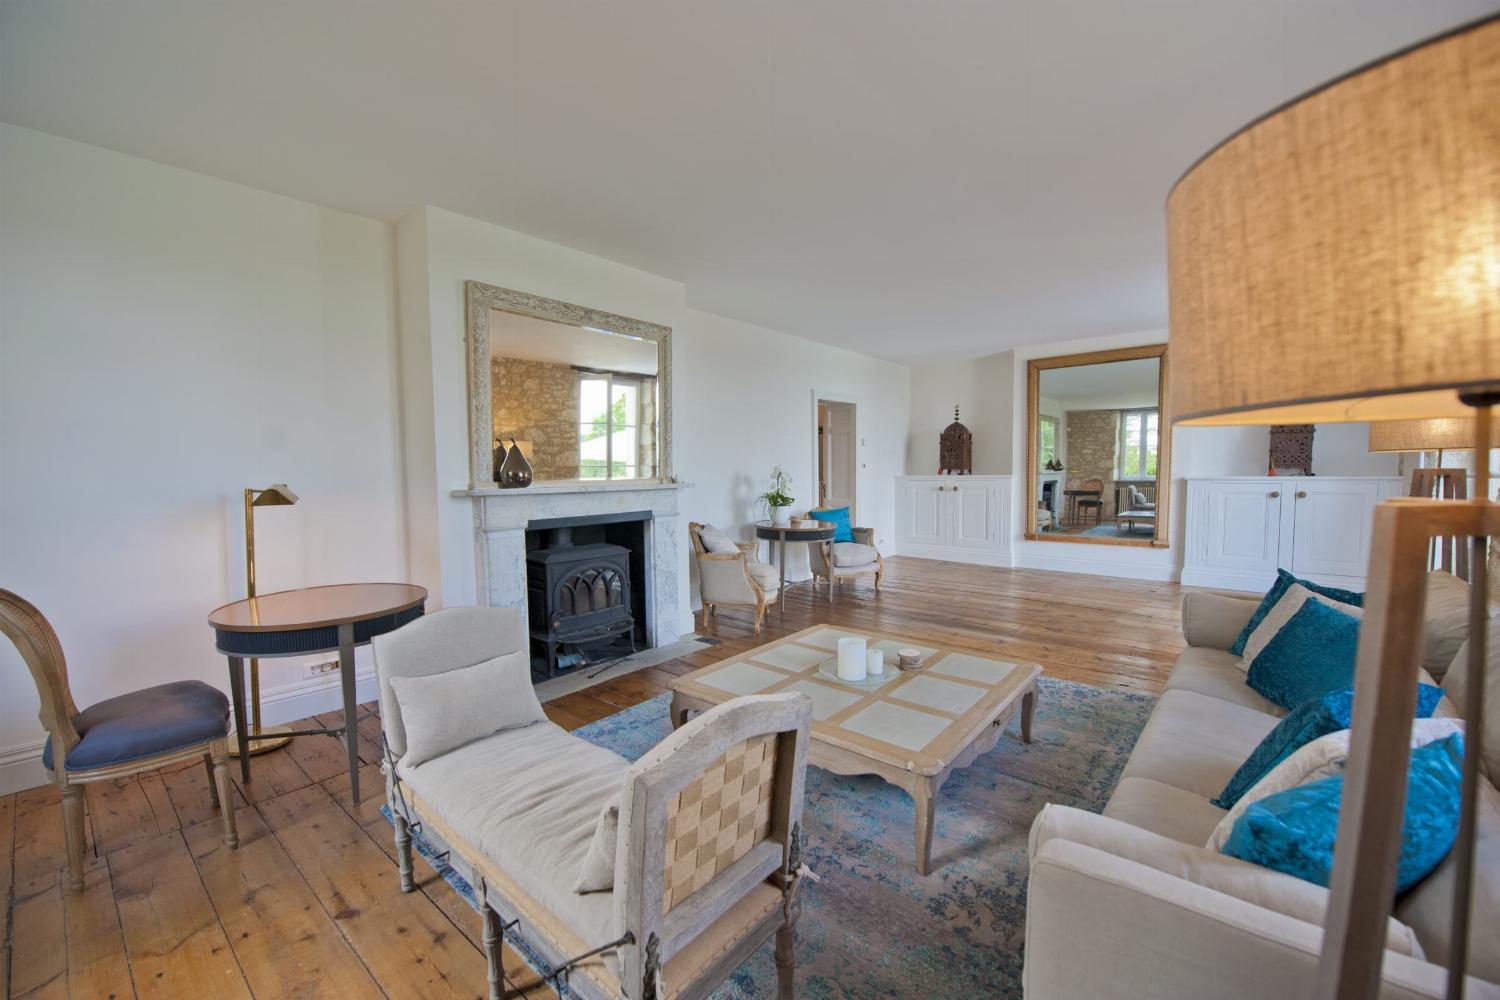 Living room | Rental home in Dordogne